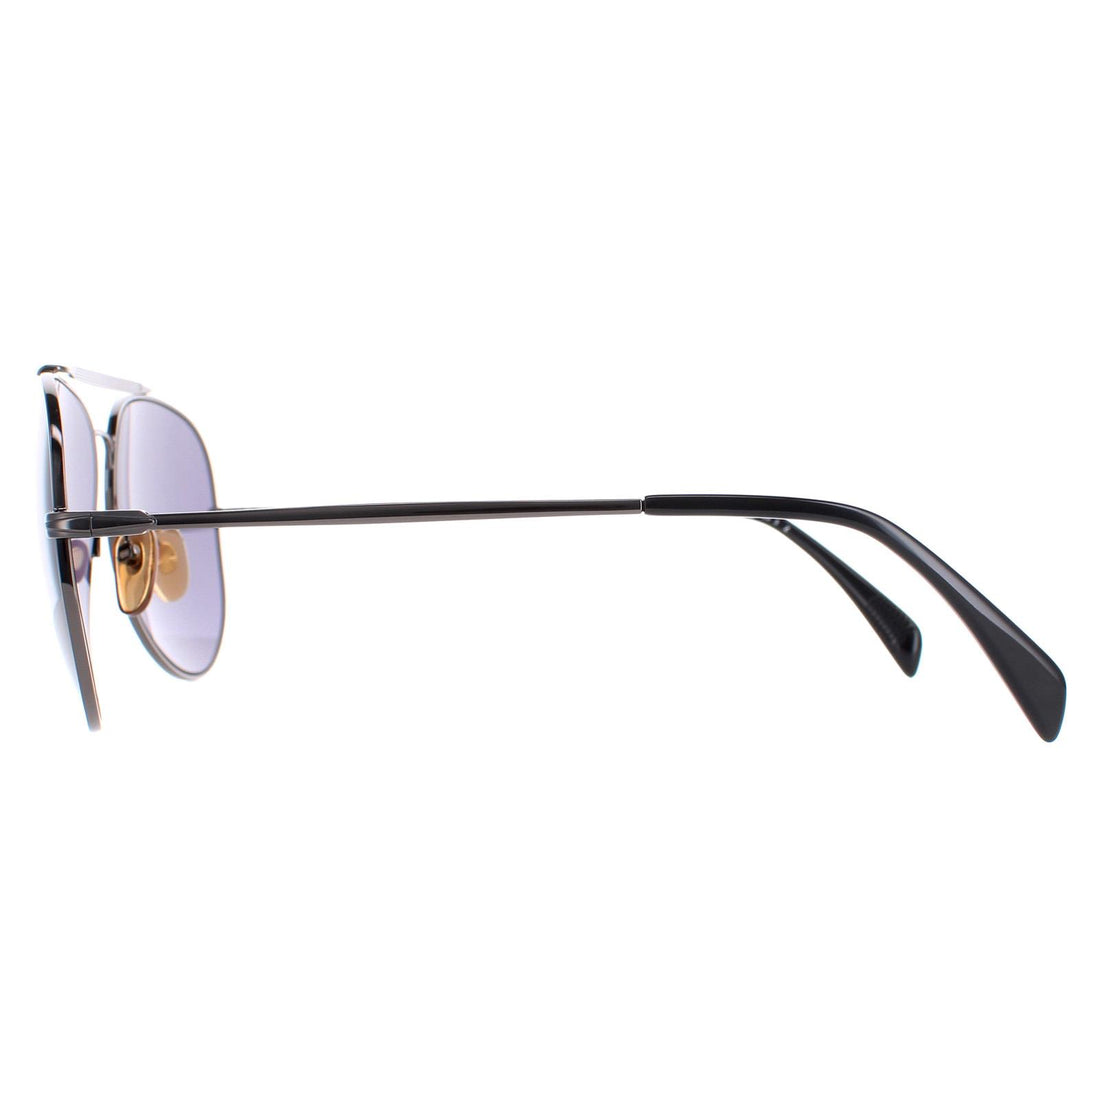 David Beckham Sunglasses DB1004/S V81 M9 Dark Ruthenium Grey Grey Polarized